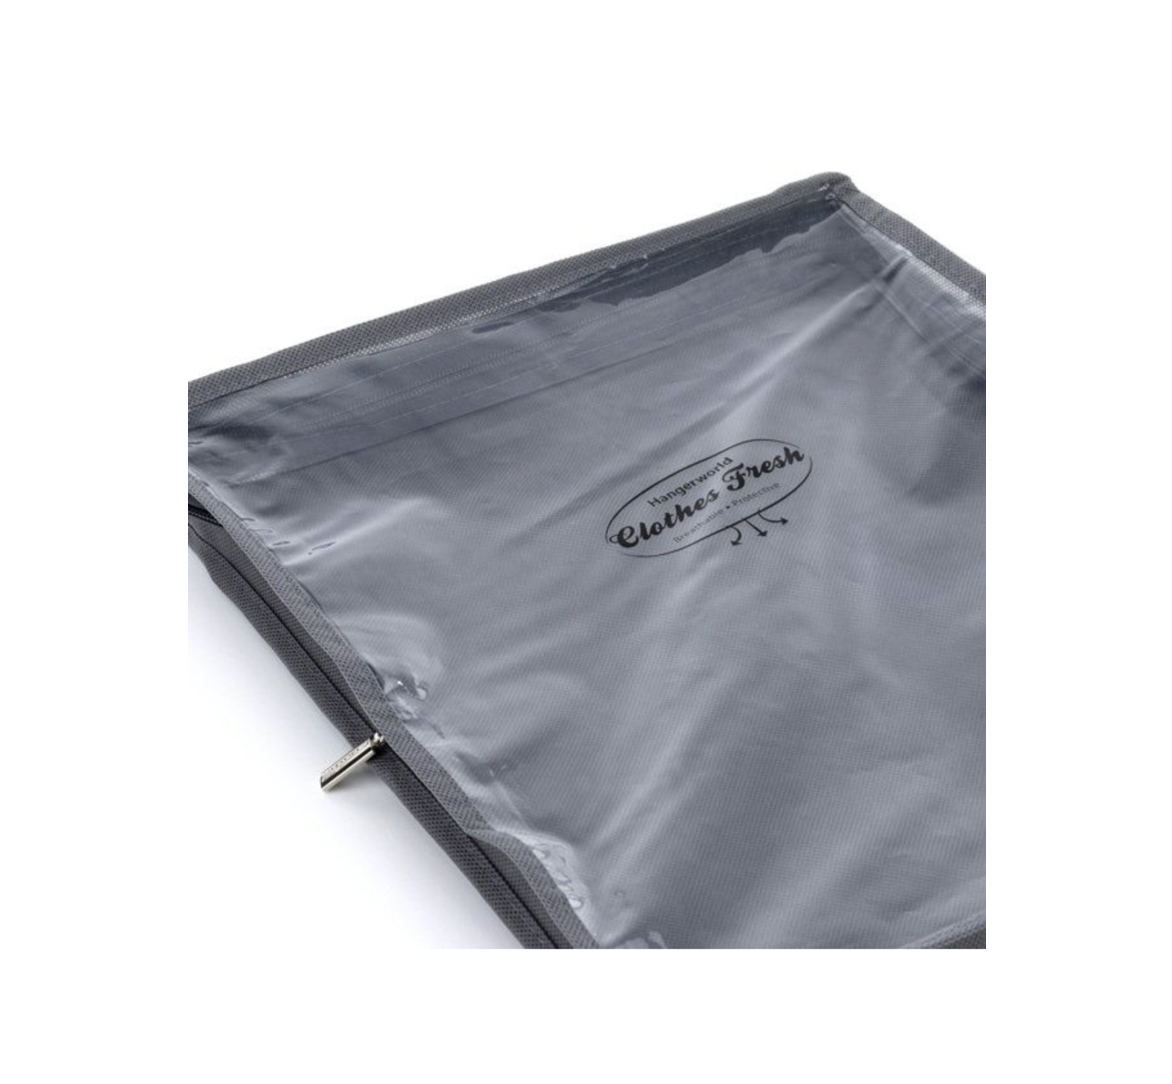 Hangerworld PROTECTIVE CLOTHES BAG Atmungsaktive Kleidungstasche  Pulli-Tasche, Grau 35 x 30cm